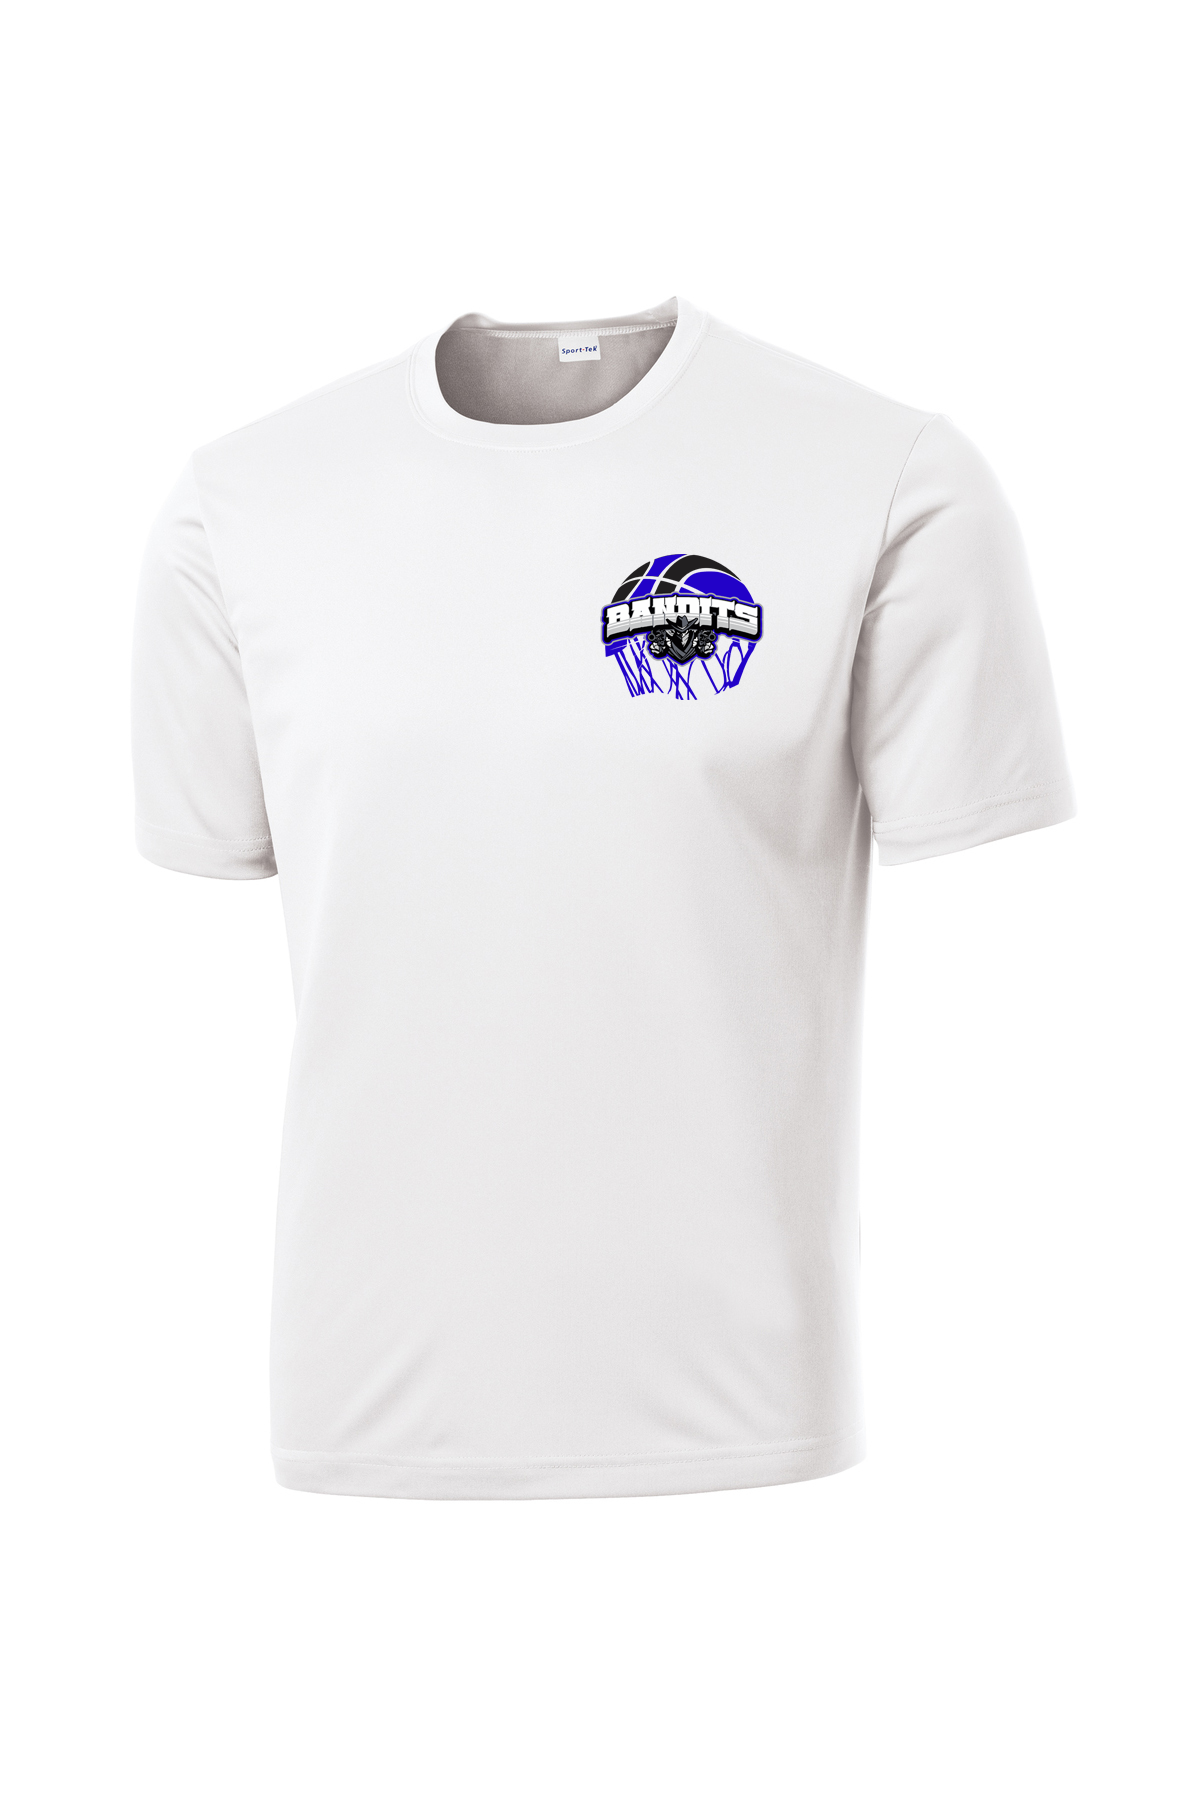 Capital City Bandits Basketball Performance T-Shirt